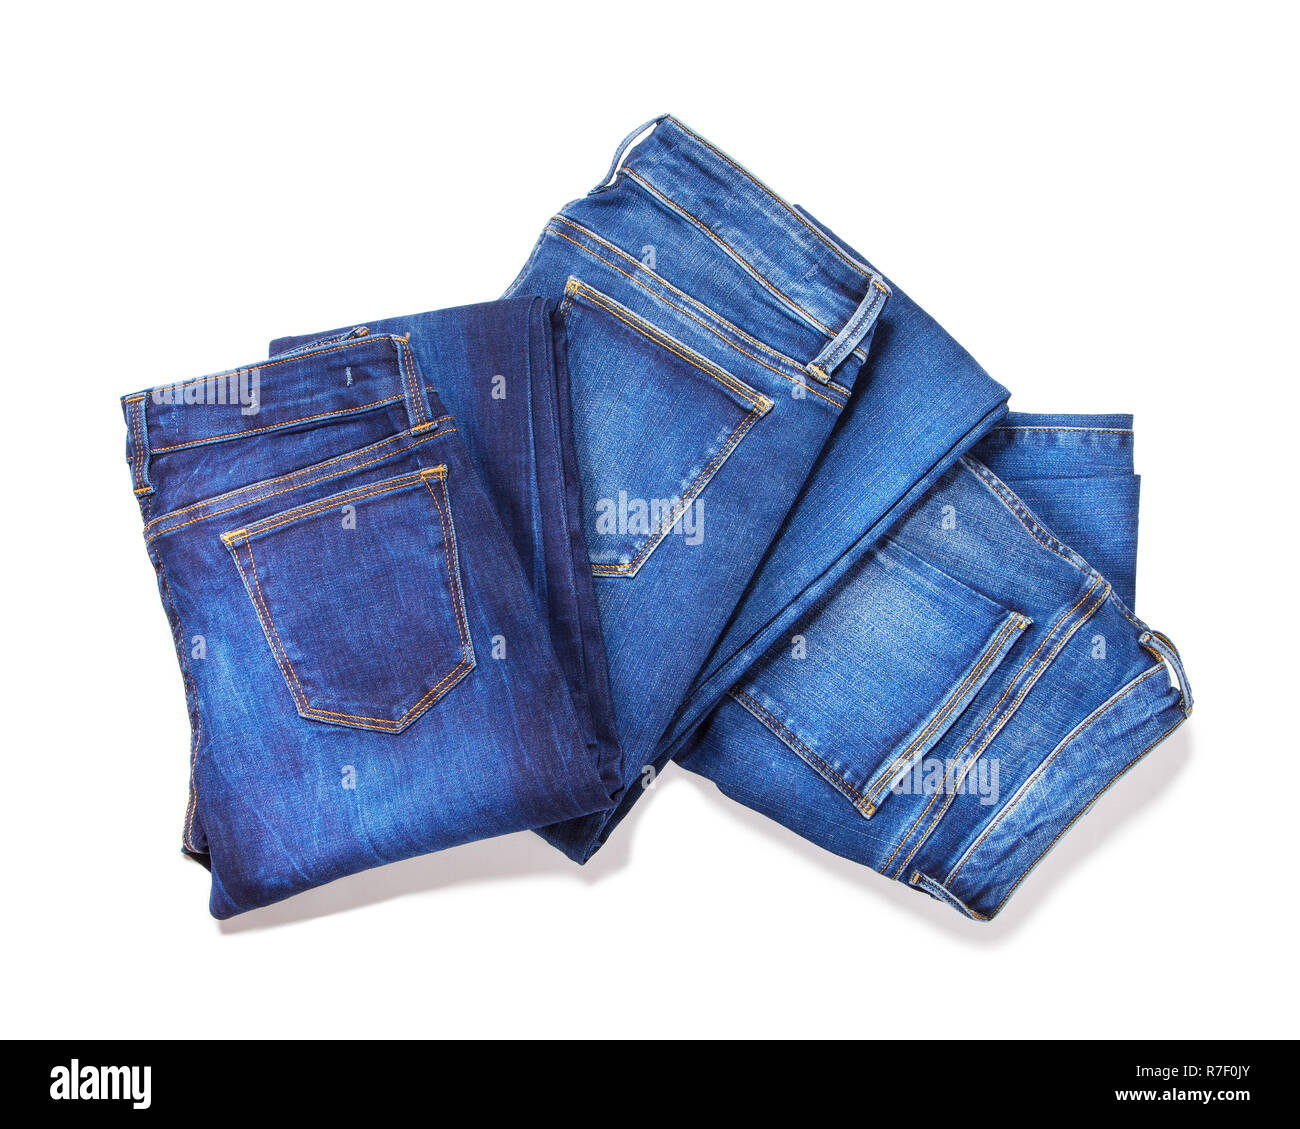 Blue Jeans gefaltet Stockfotografie - Alamy